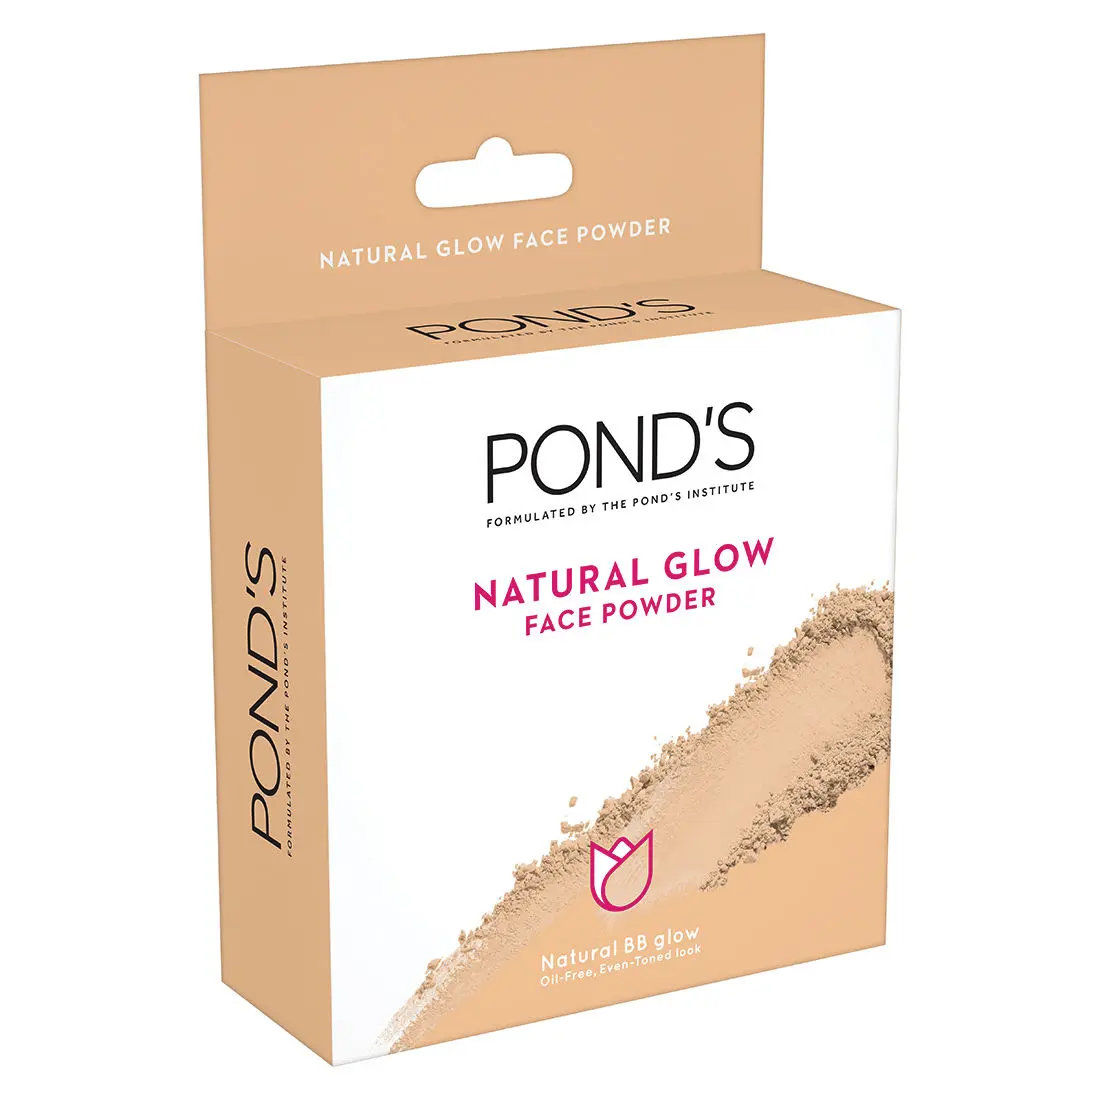 Pond's Natural Glow Face Powder, BB Glow - 30G